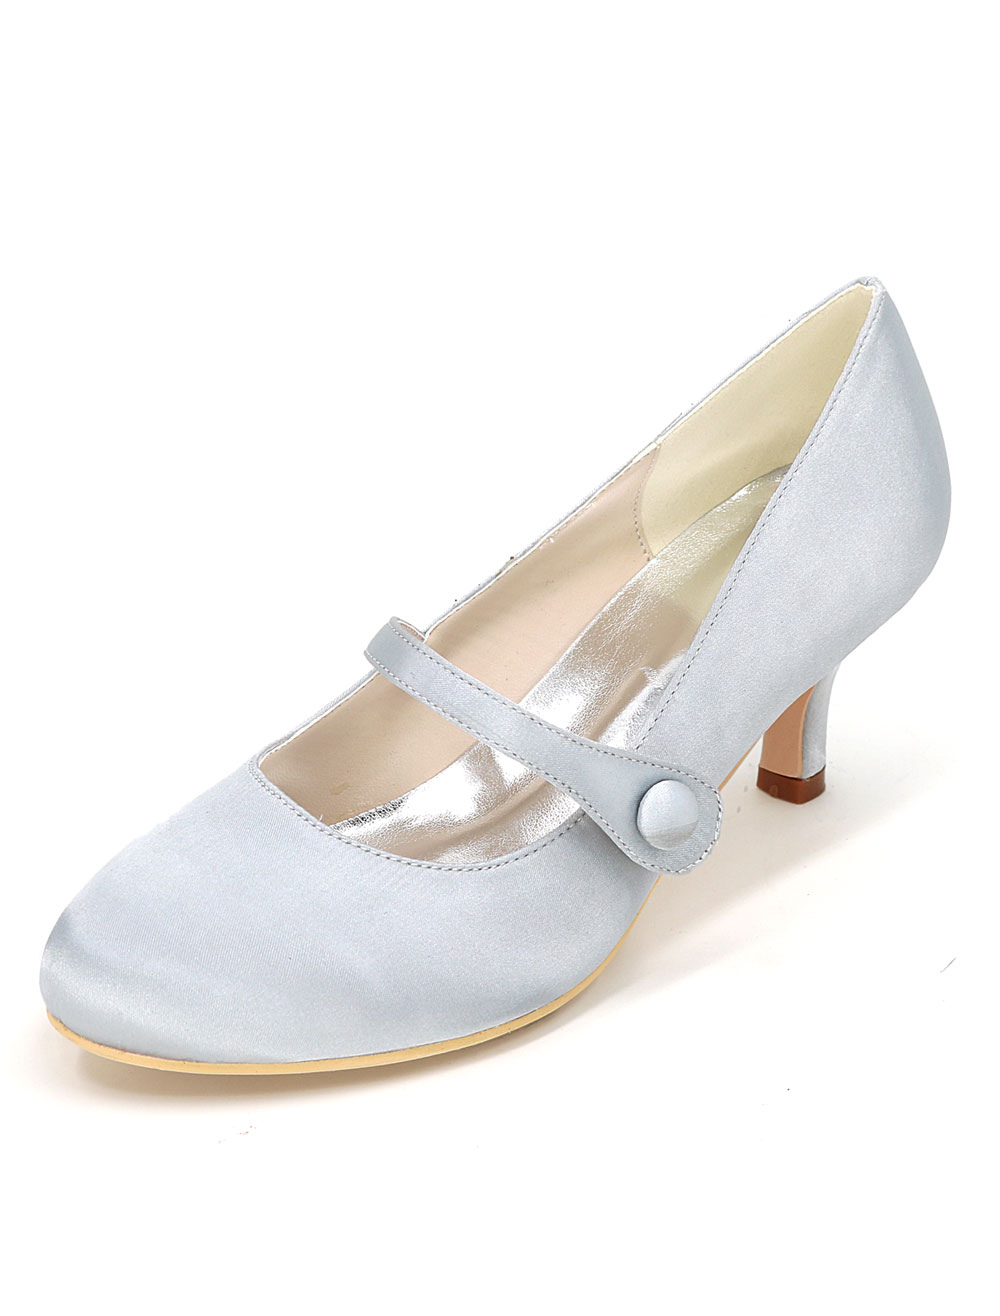 Vintage Wedding Shoes White Mary Jane Heels Button Round Toe Bridal ...